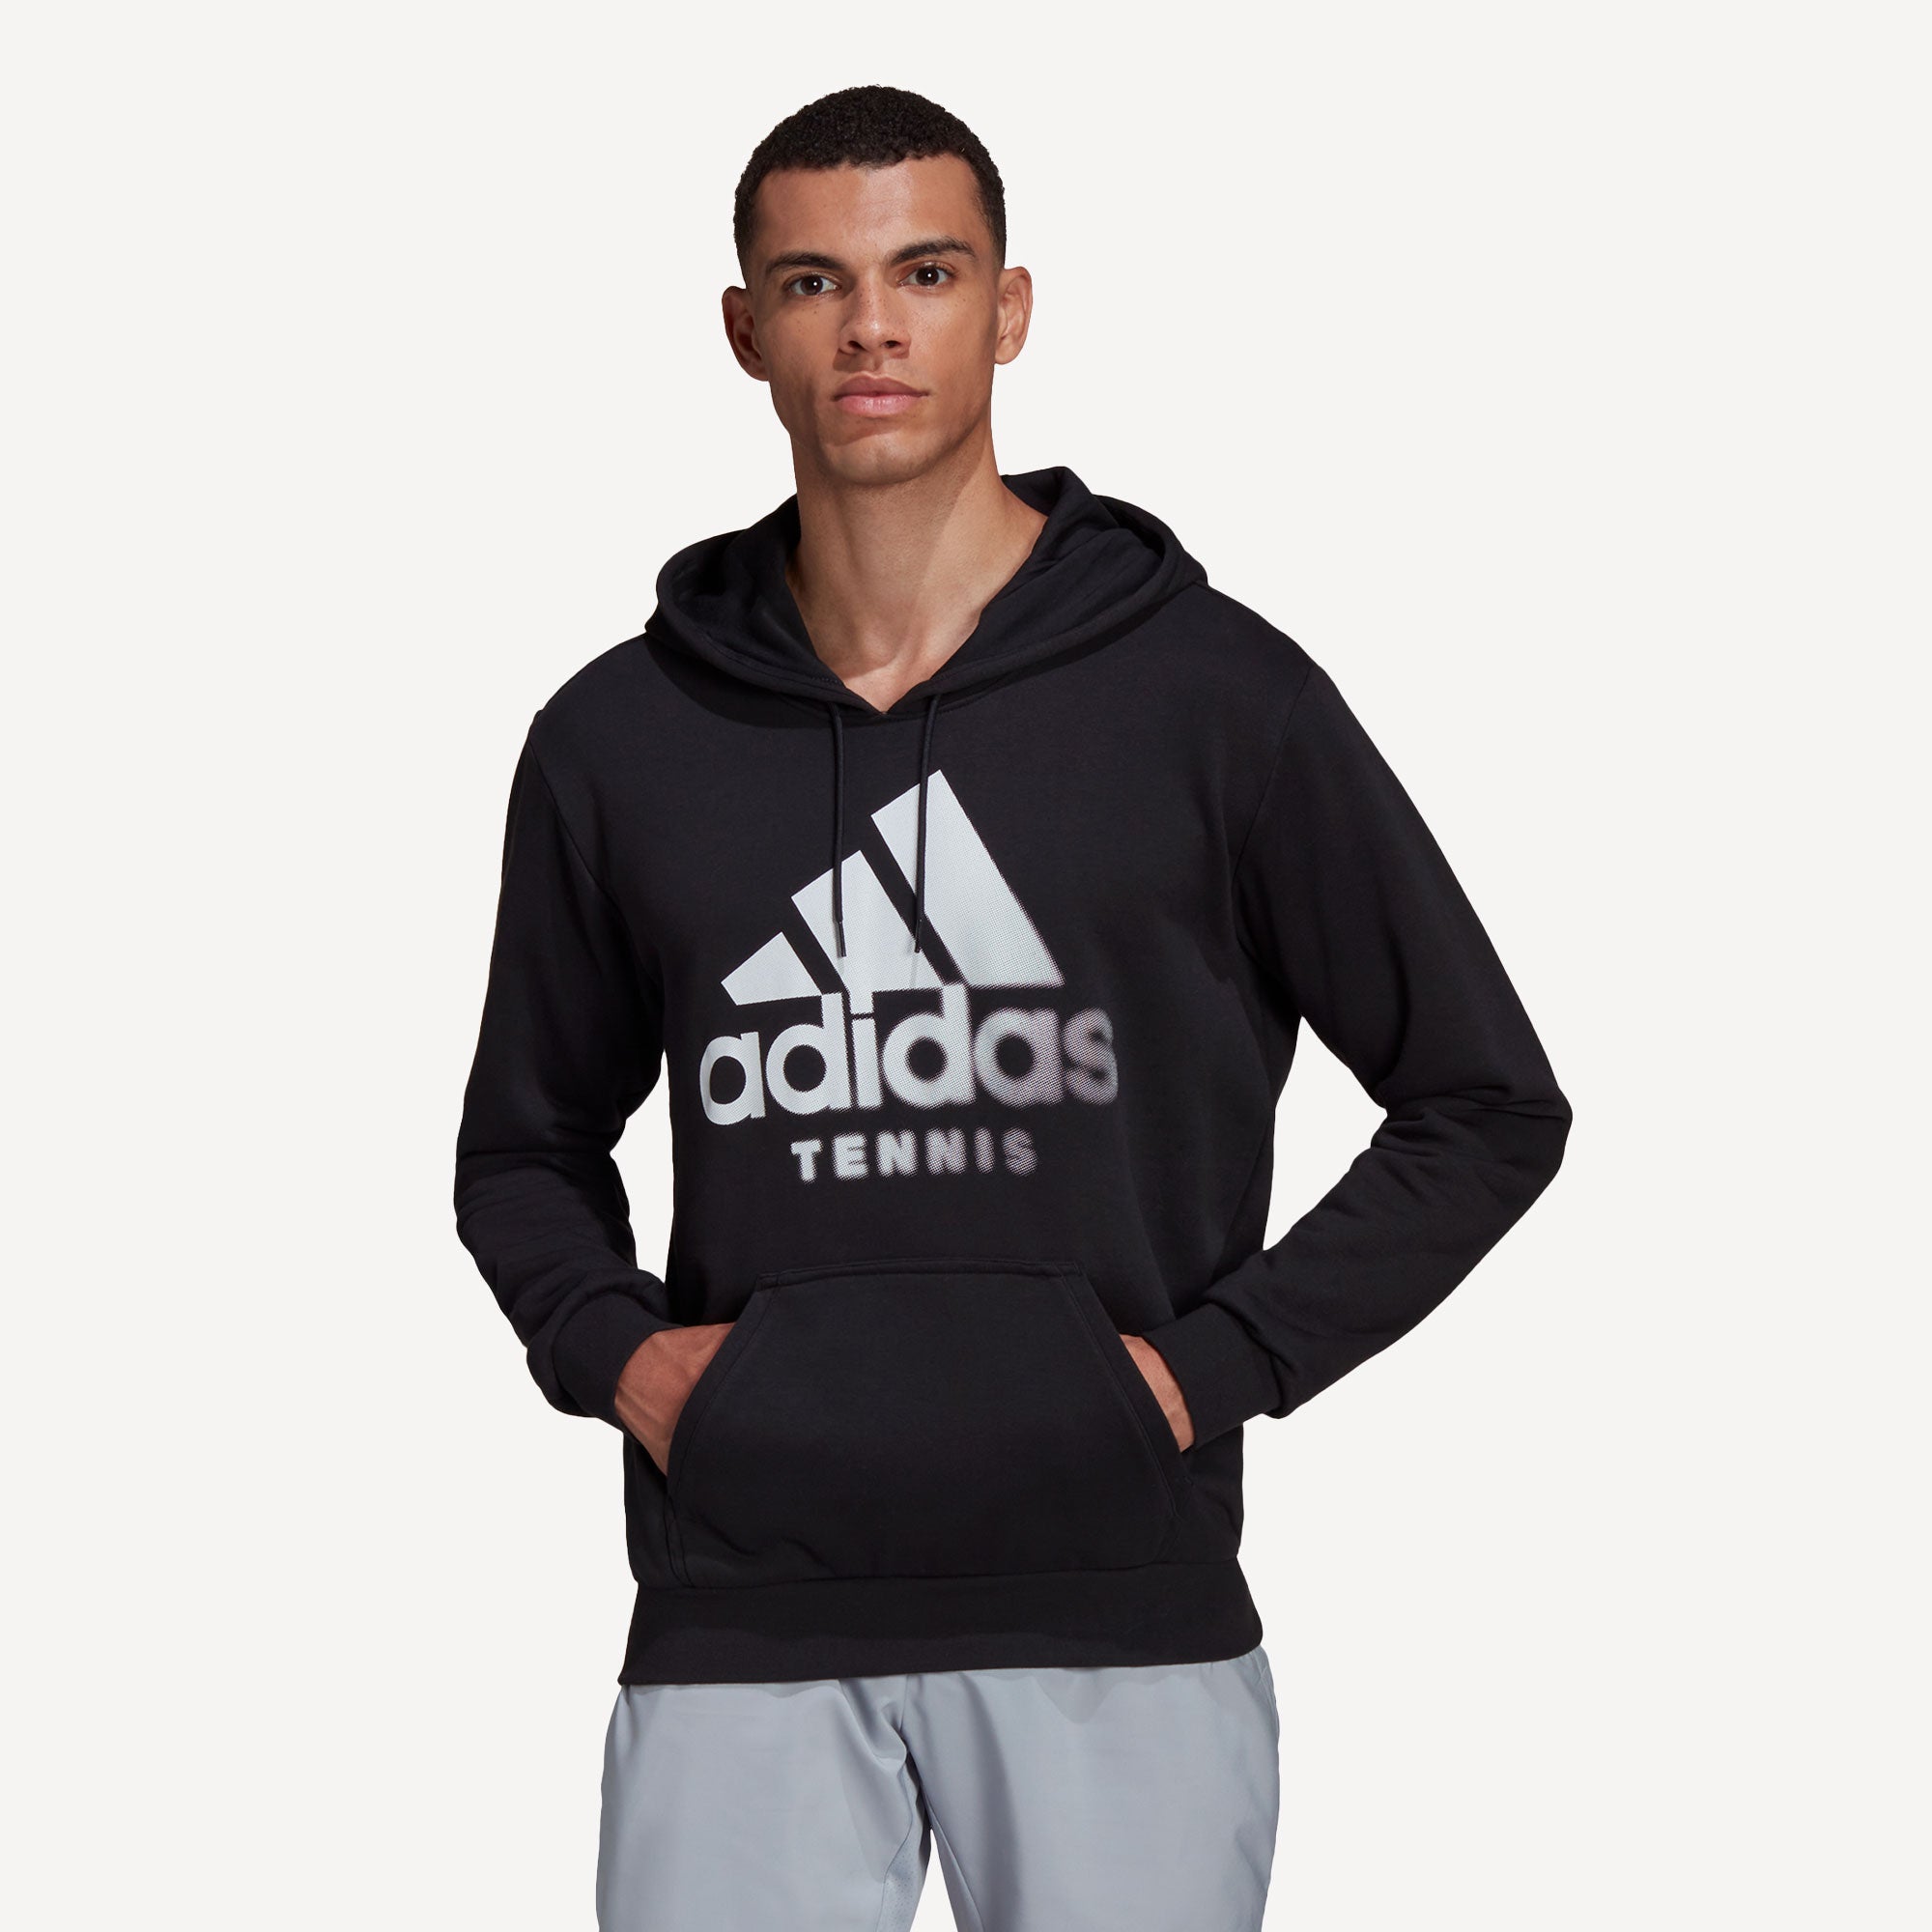 adidas Men's Graphic Tennis Hoodie Black (1)